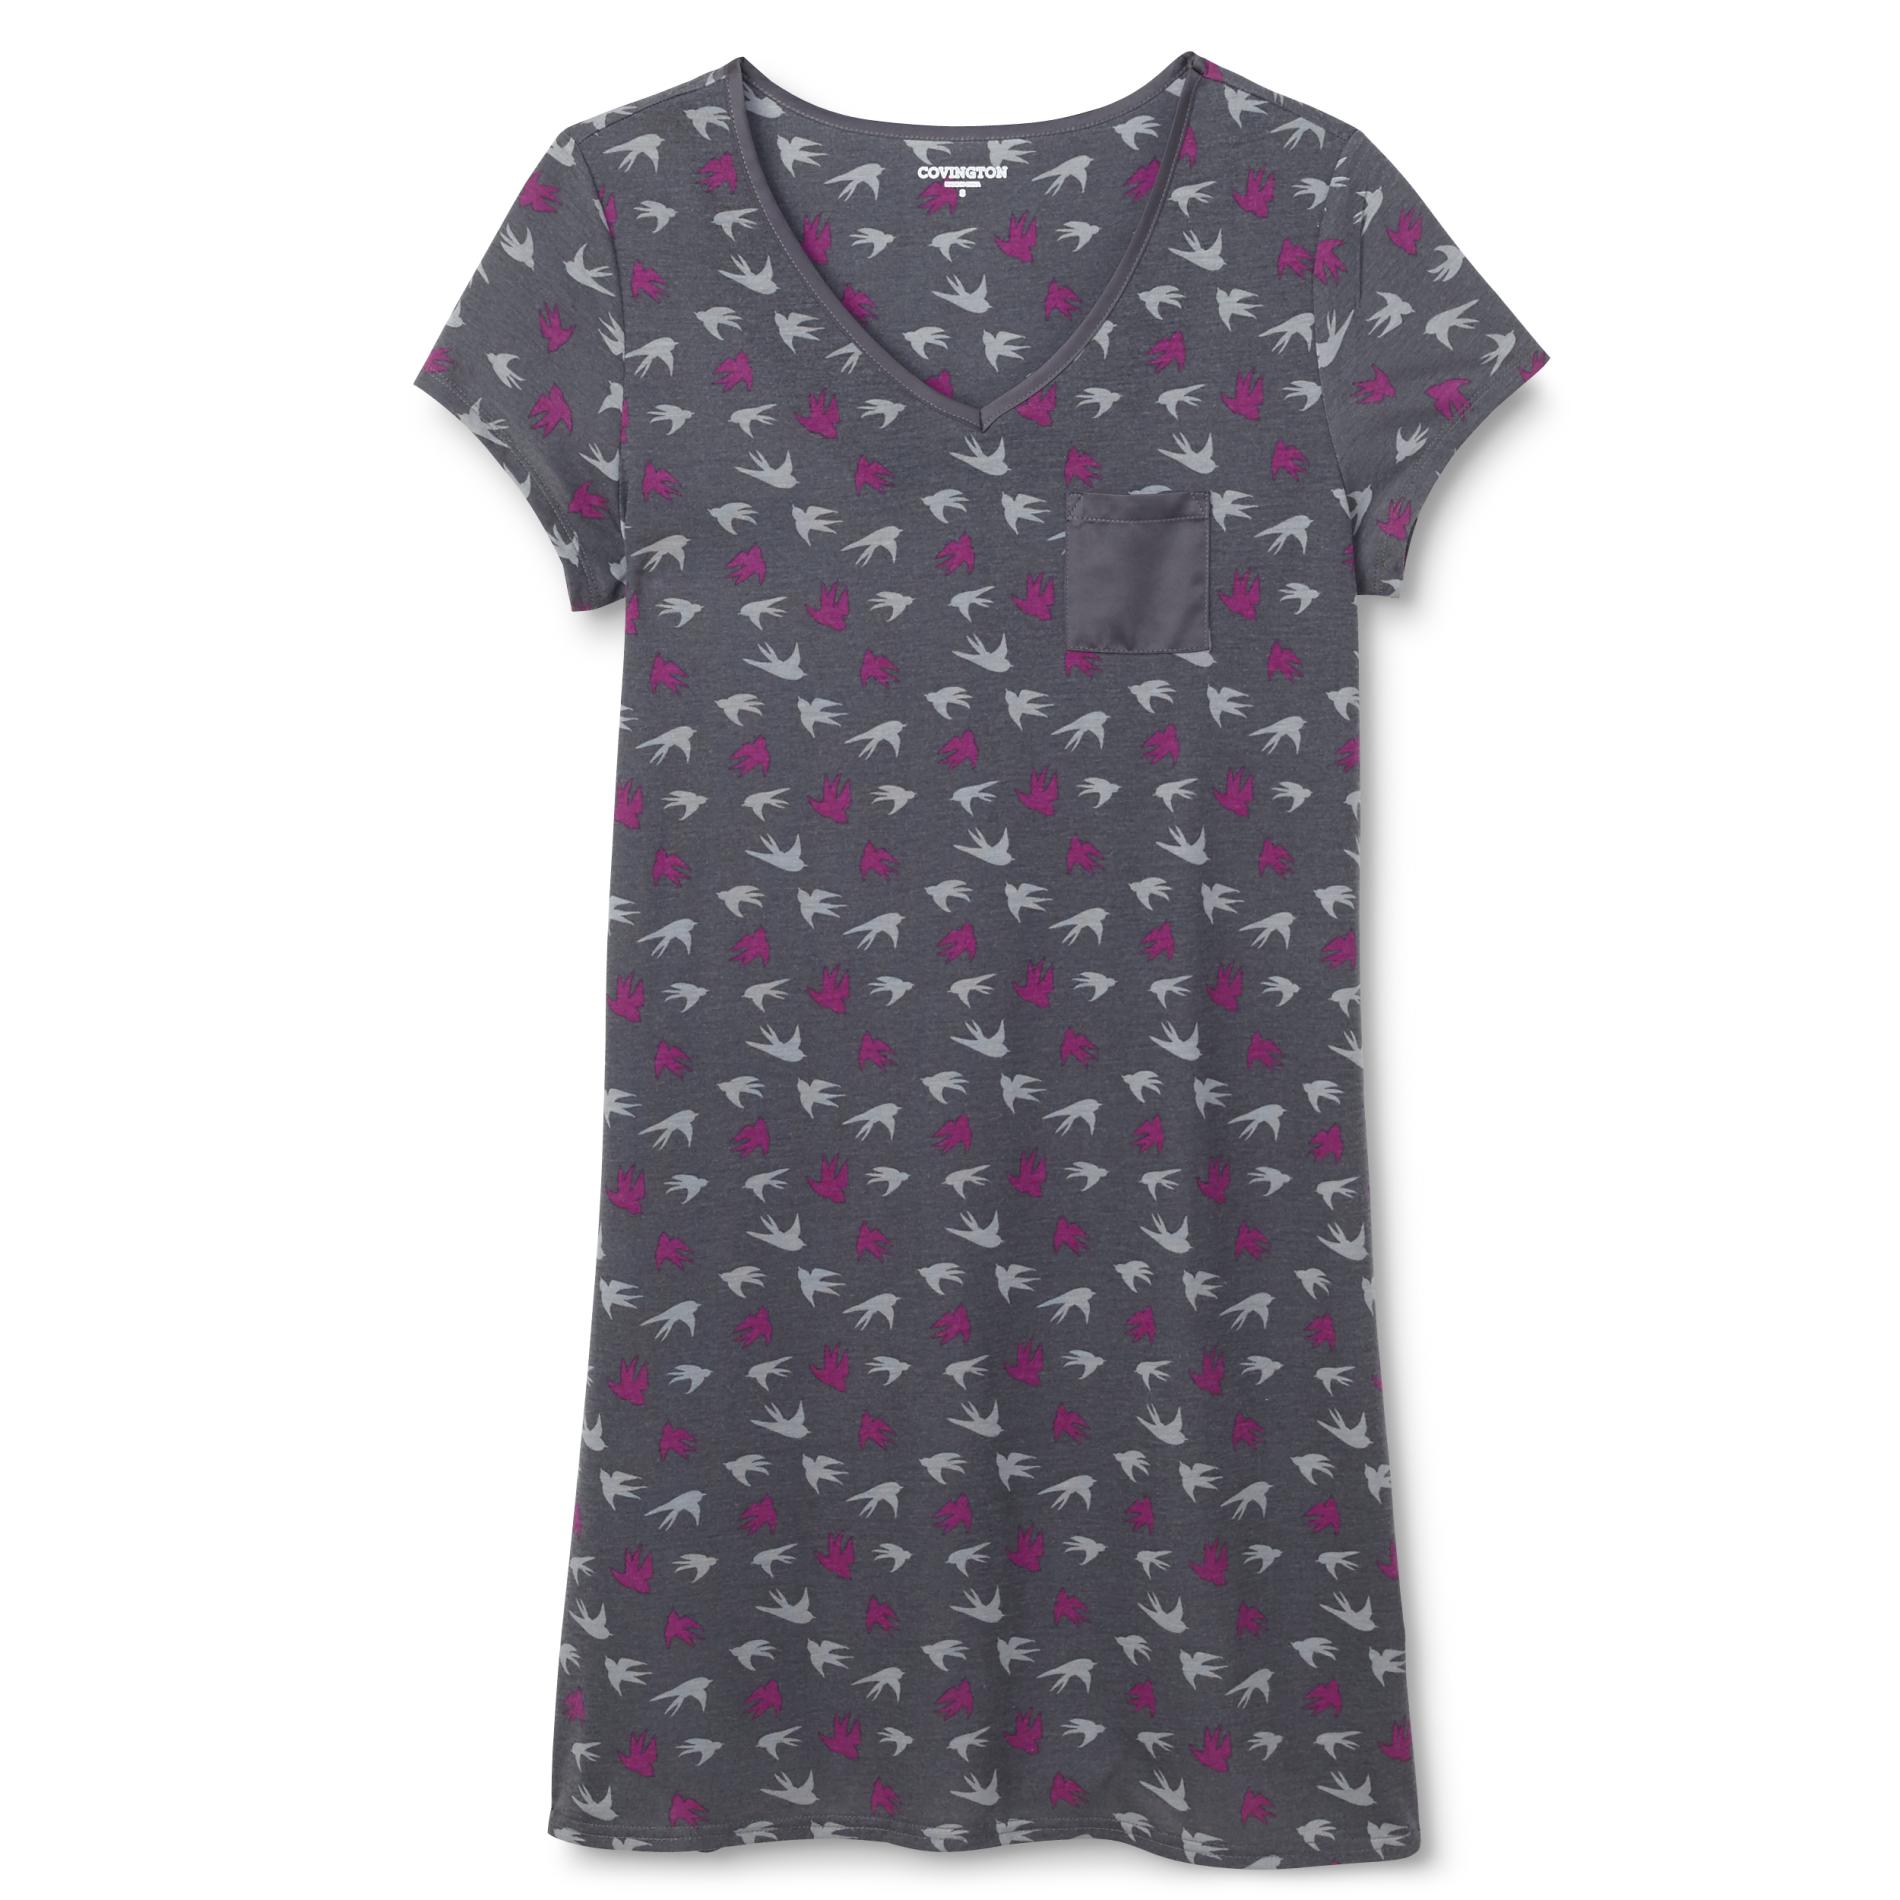 Covington Women's Sleep Shirt - Bird Print